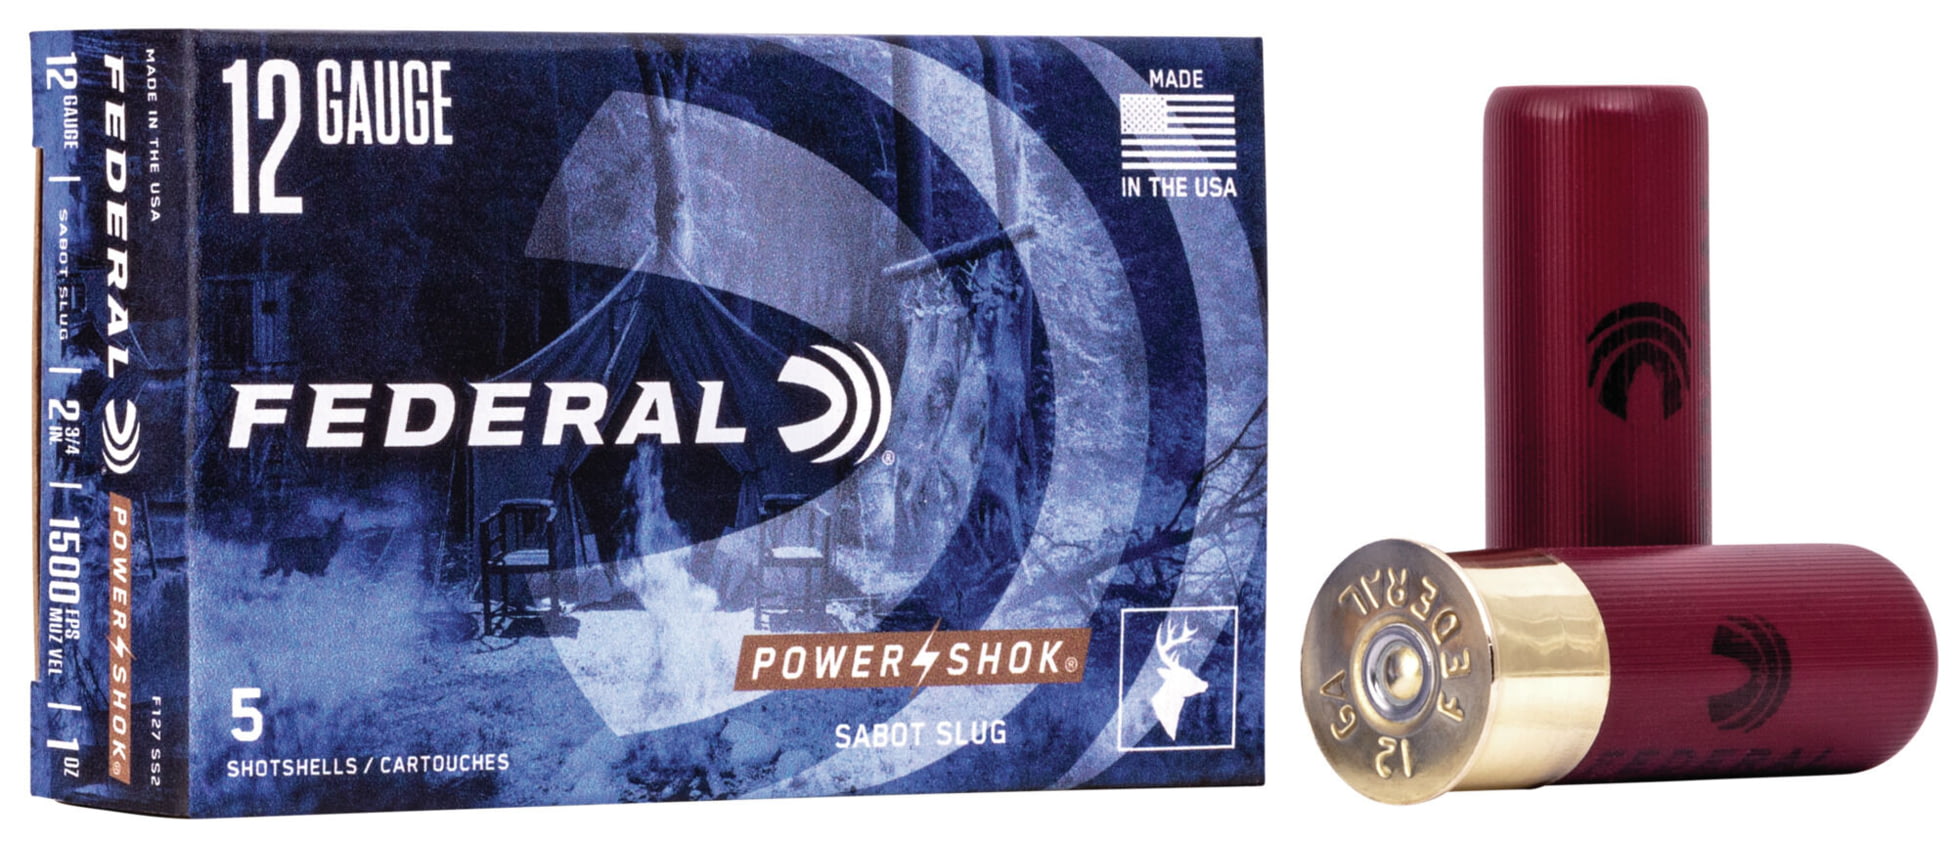 Federal Premium Power Shok 12 Gauge 1 oz Power Shok Sabot Slug Centerfire Shotgun Ammunition